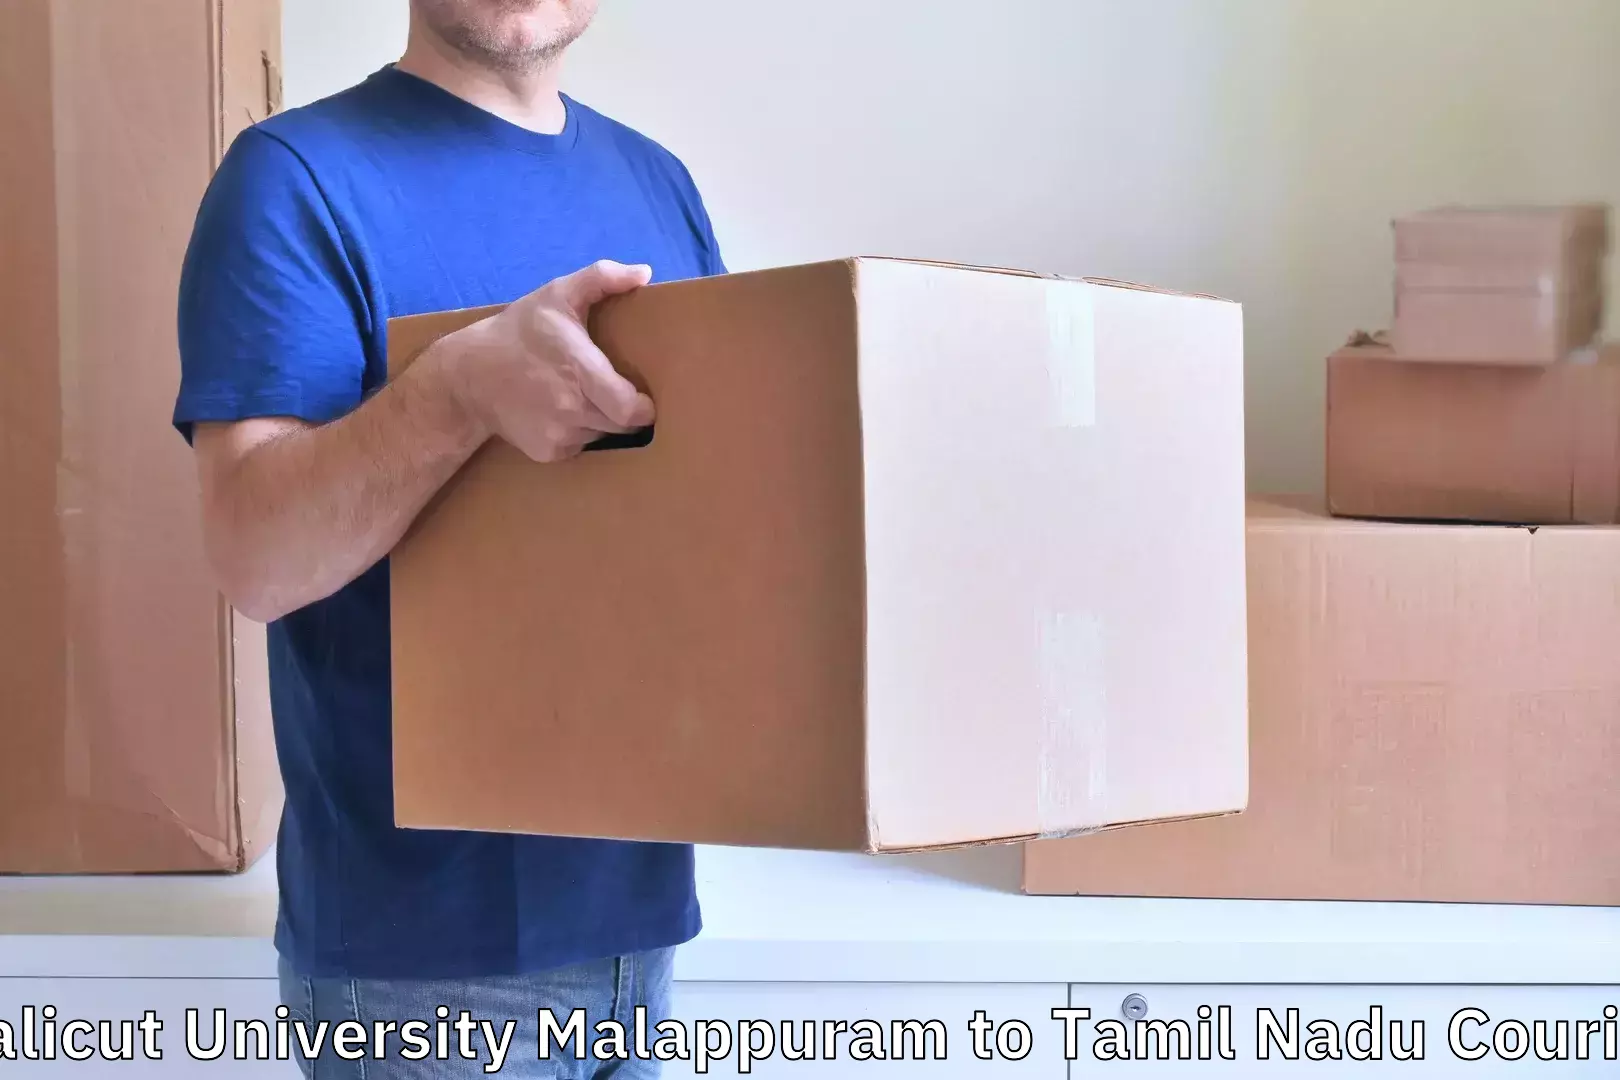 Luggage delivery estimate Calicut University Malappuram to Narikkudi